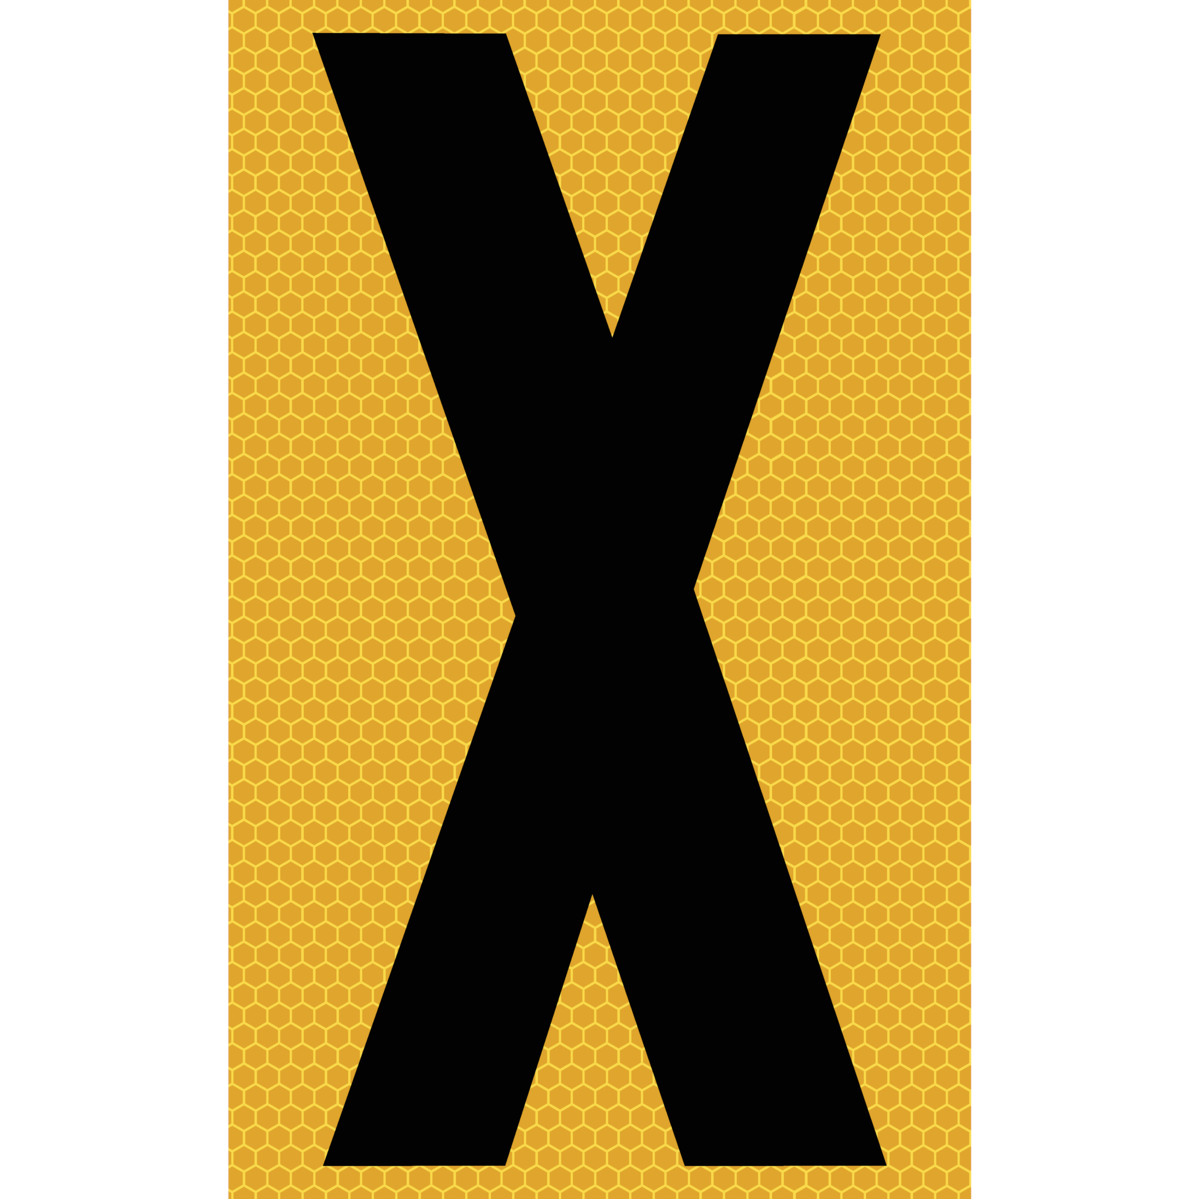 3" Black on Yellow SunBright® Reflective "X"